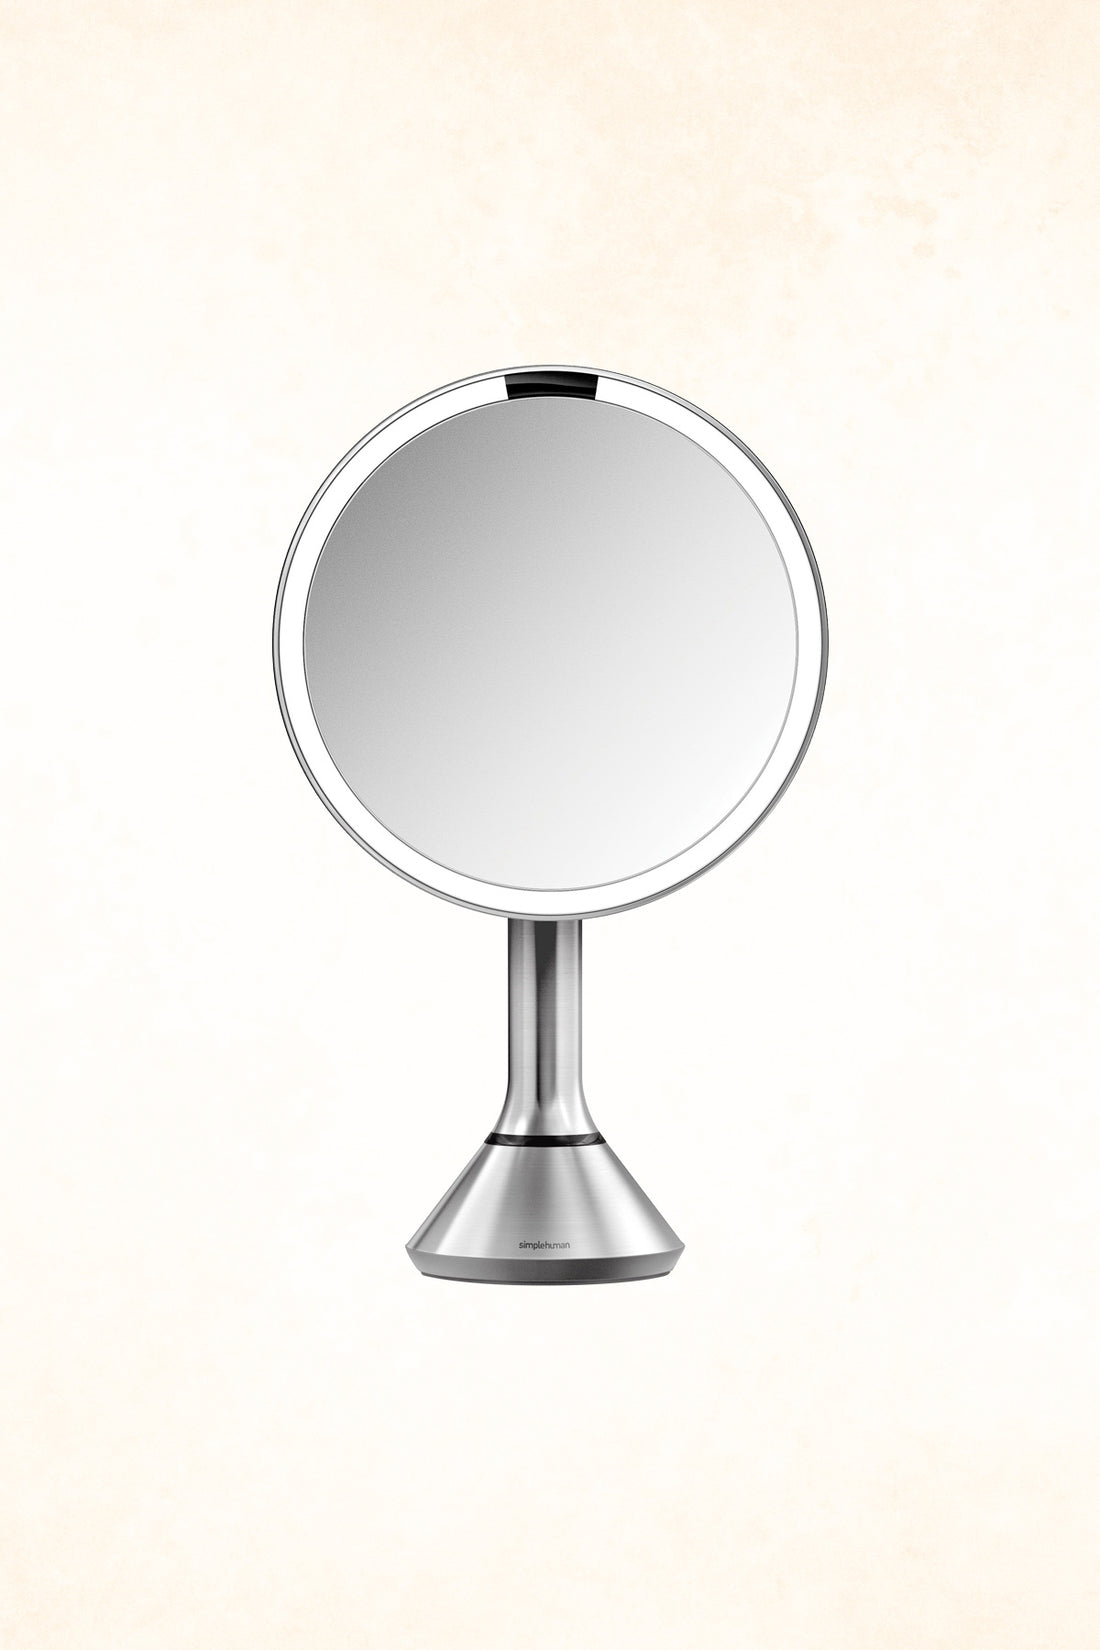 Simplehuman – 20cm sensor mirror touch control brightness - 5 x Magnification - Brushed